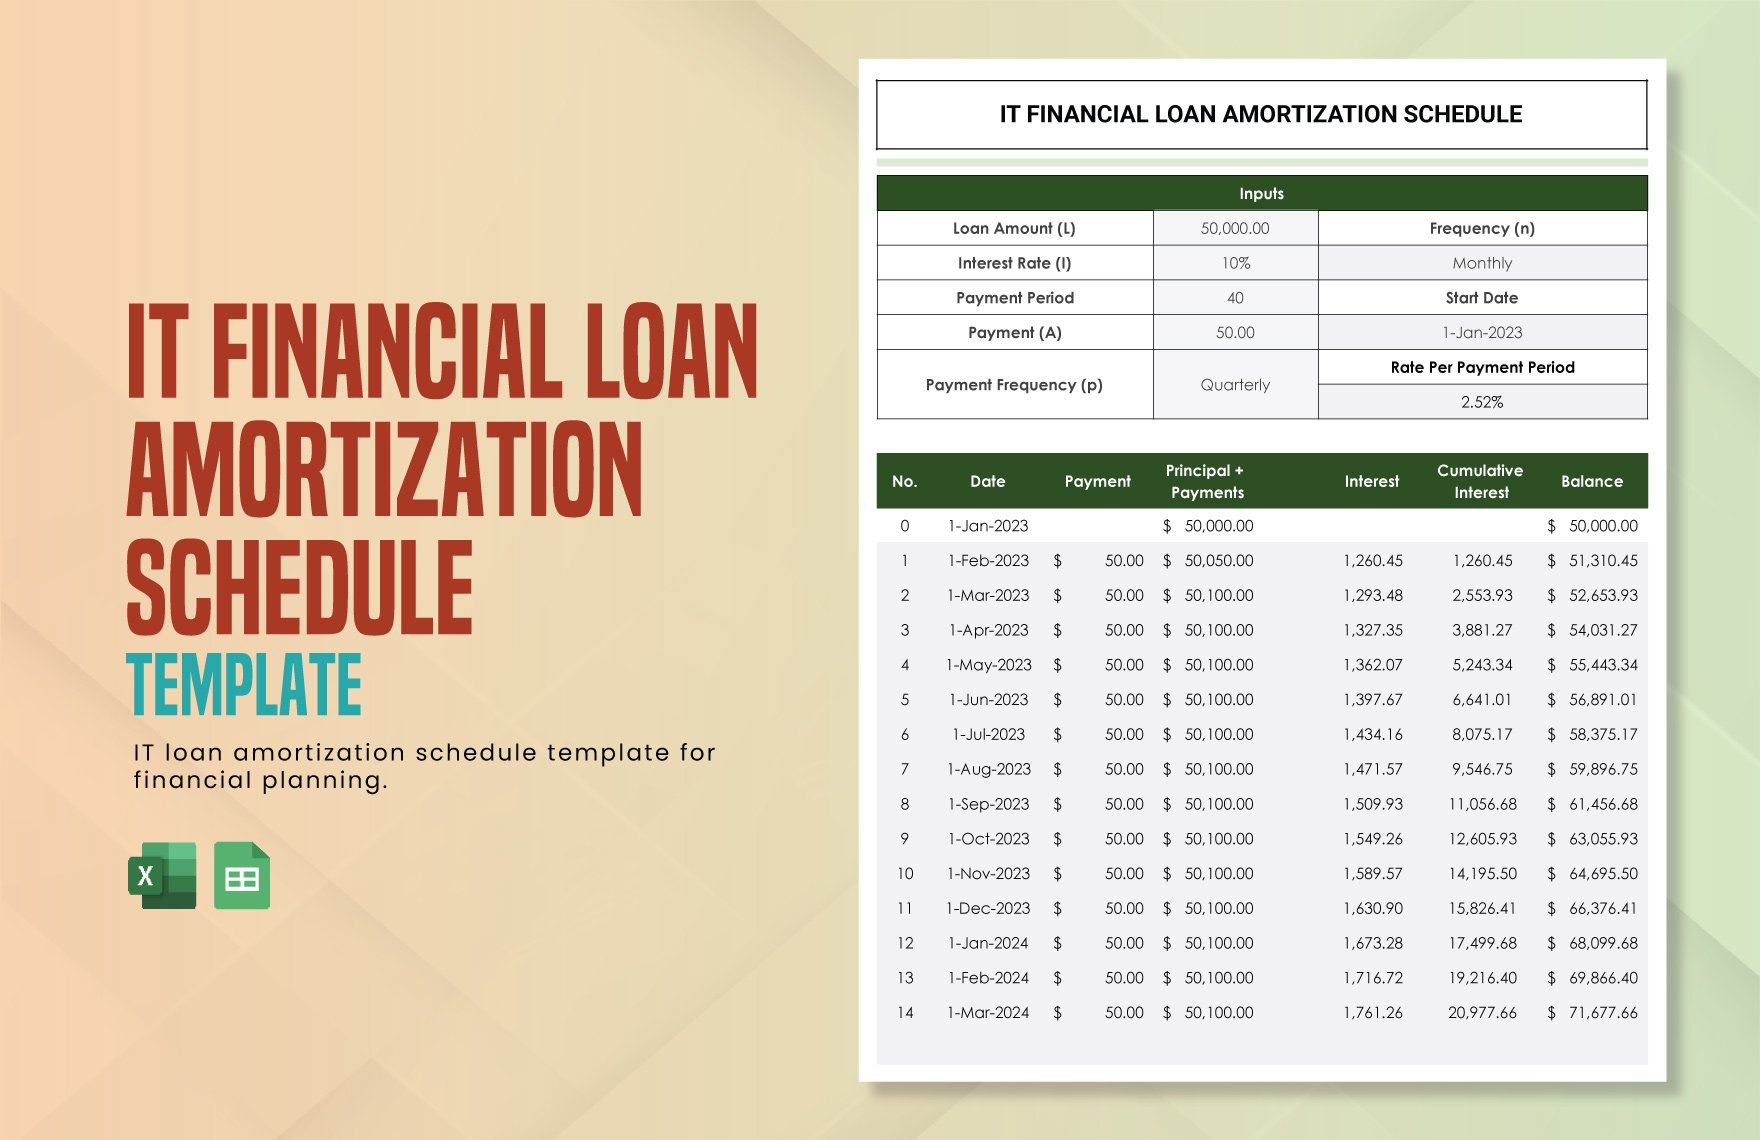 IT Financial Loan Amortization Schedule Template in Excel, Google Sheets